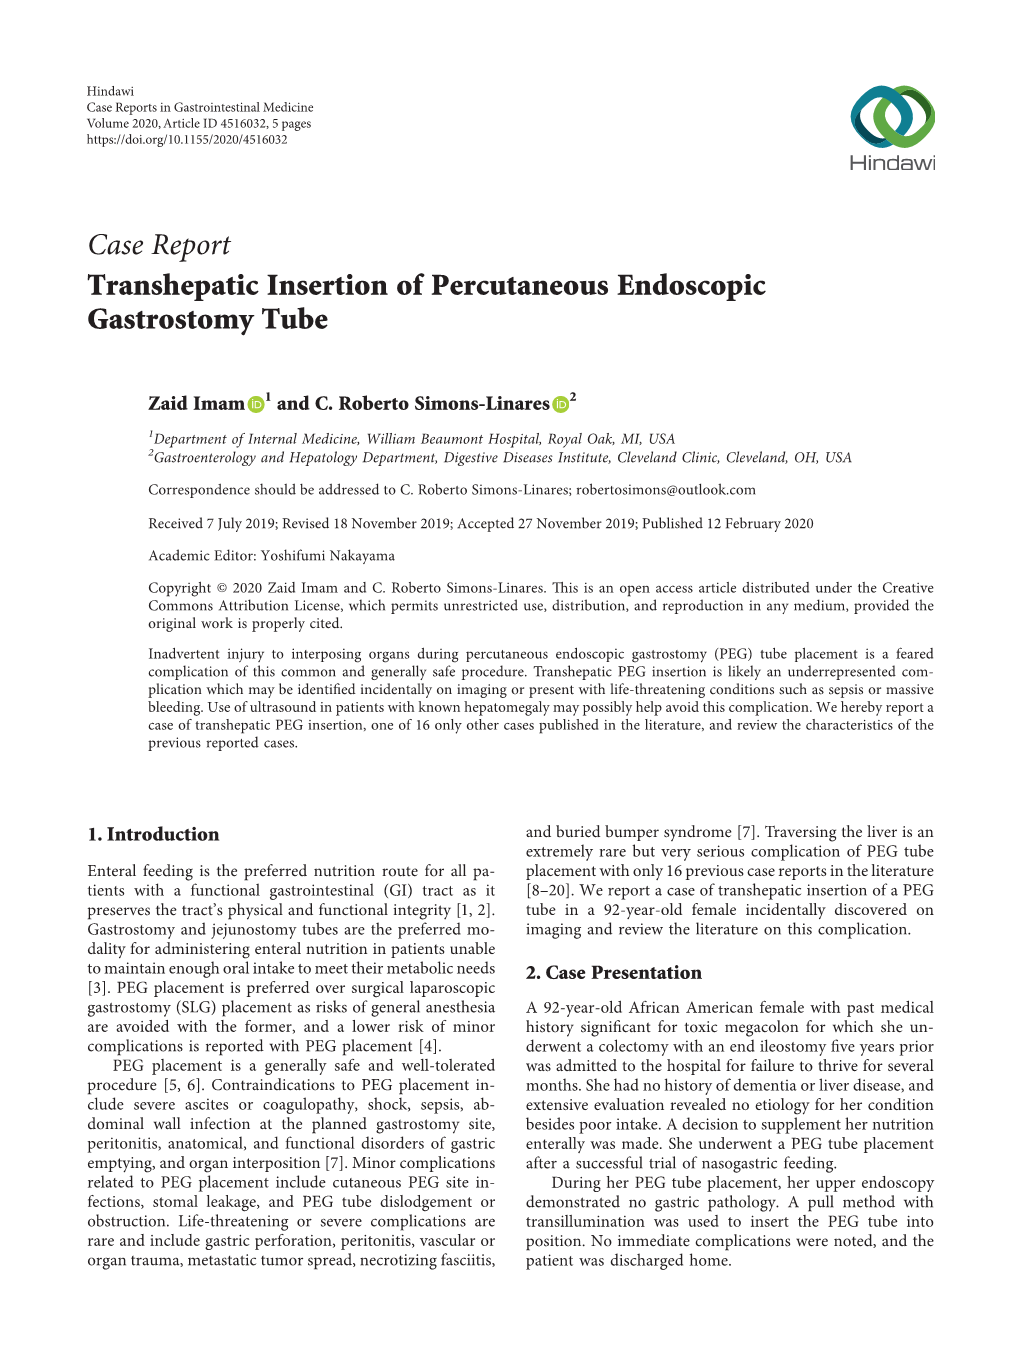 Transhepatic Insertion of Percutaneous Endoscopic Gastrostomy Tube